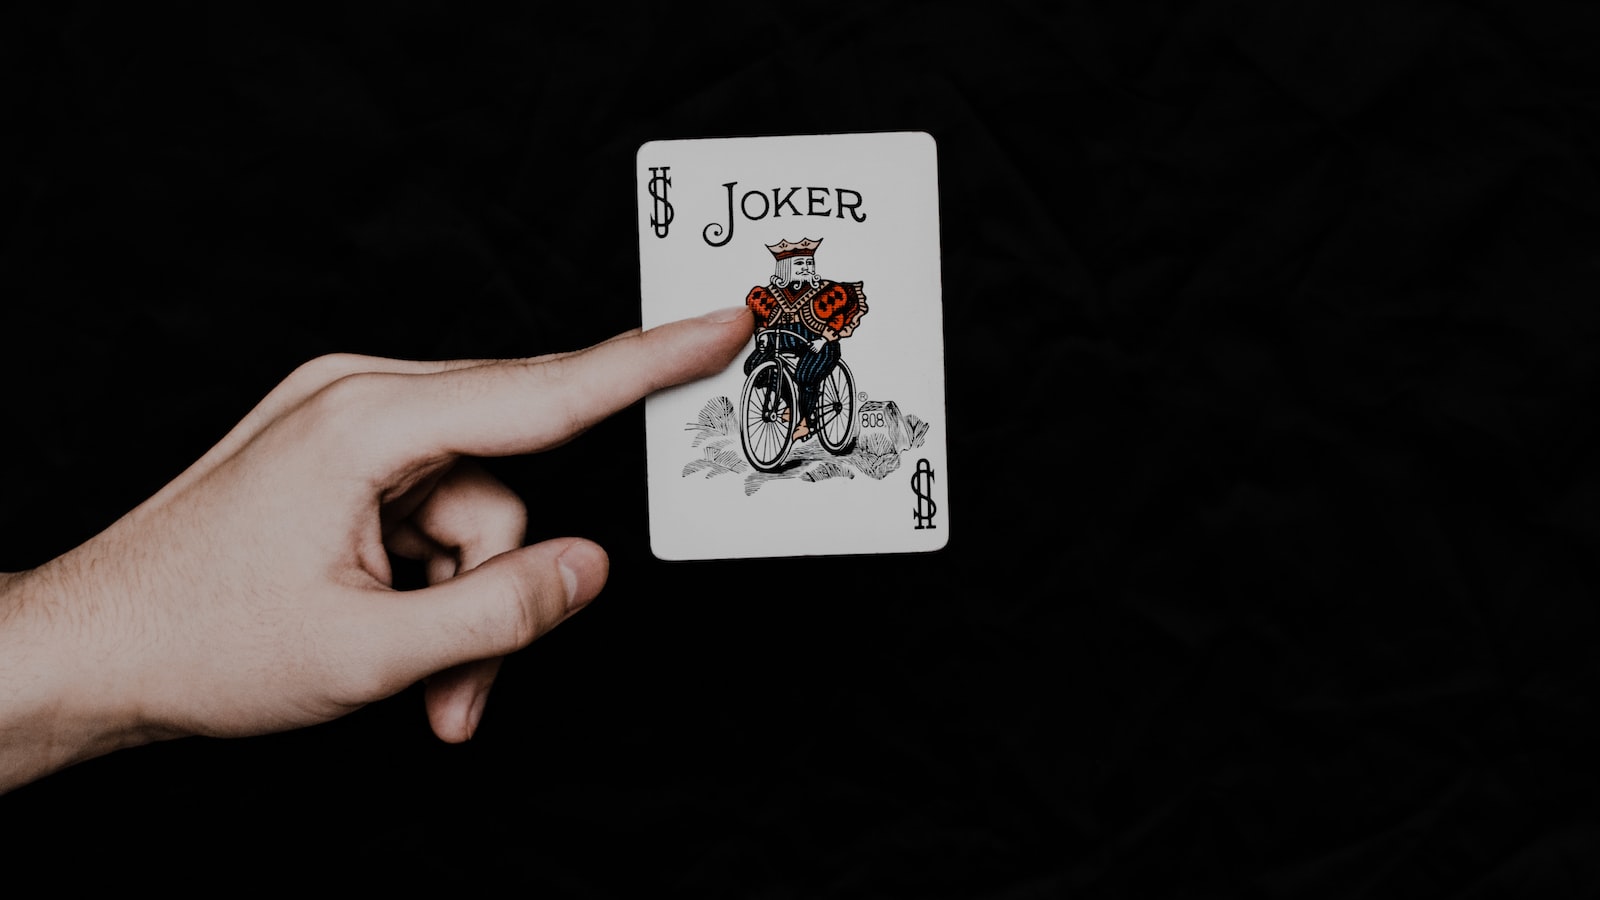 “The Art of Bluffing: Poker Players’ Best-Kept Secrets”